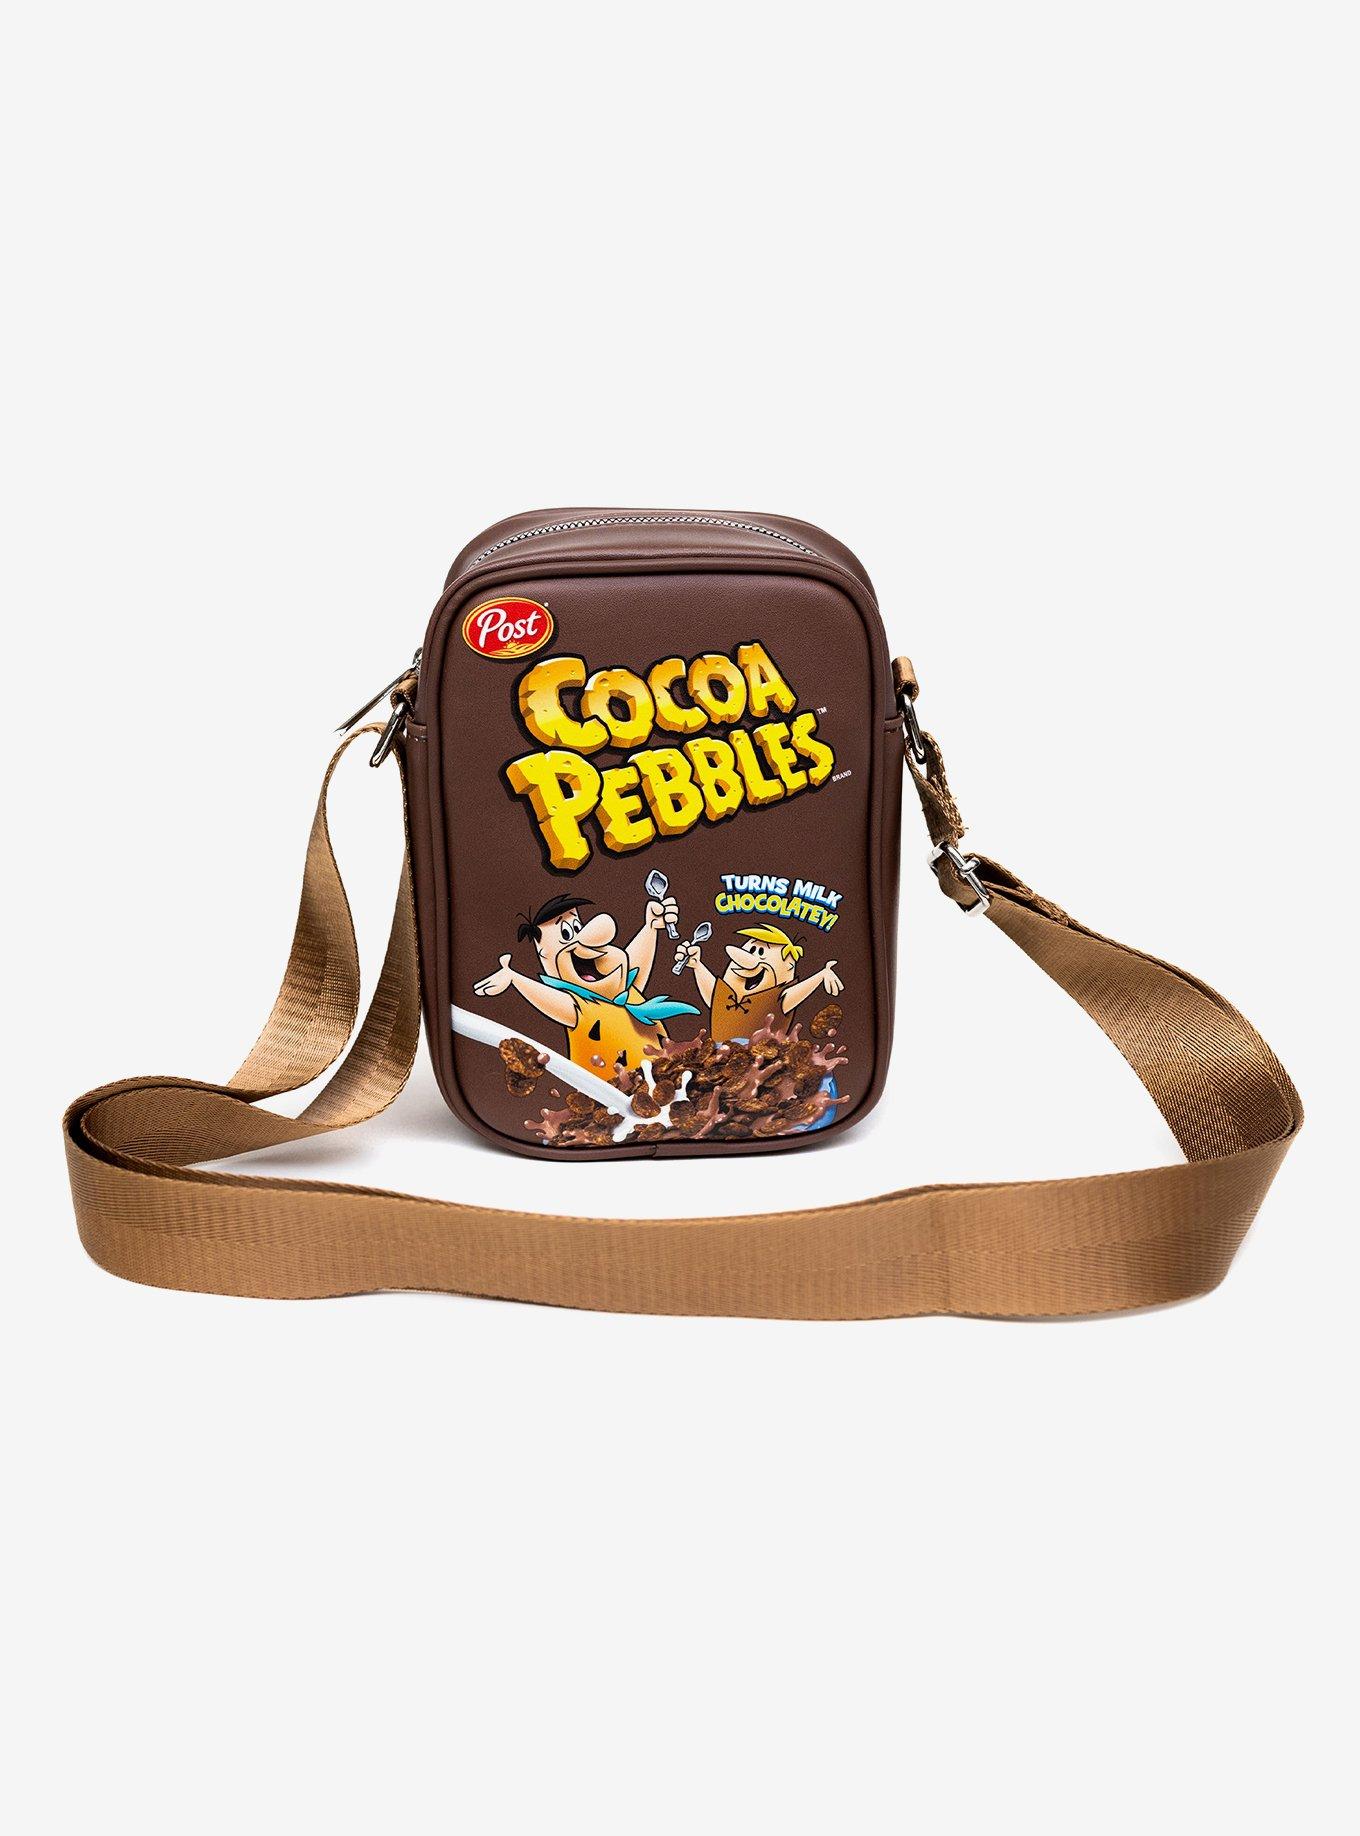 The Flintstones Cocoa Pebbles Fred Barney Cereal Box Replica Crossbody Bag